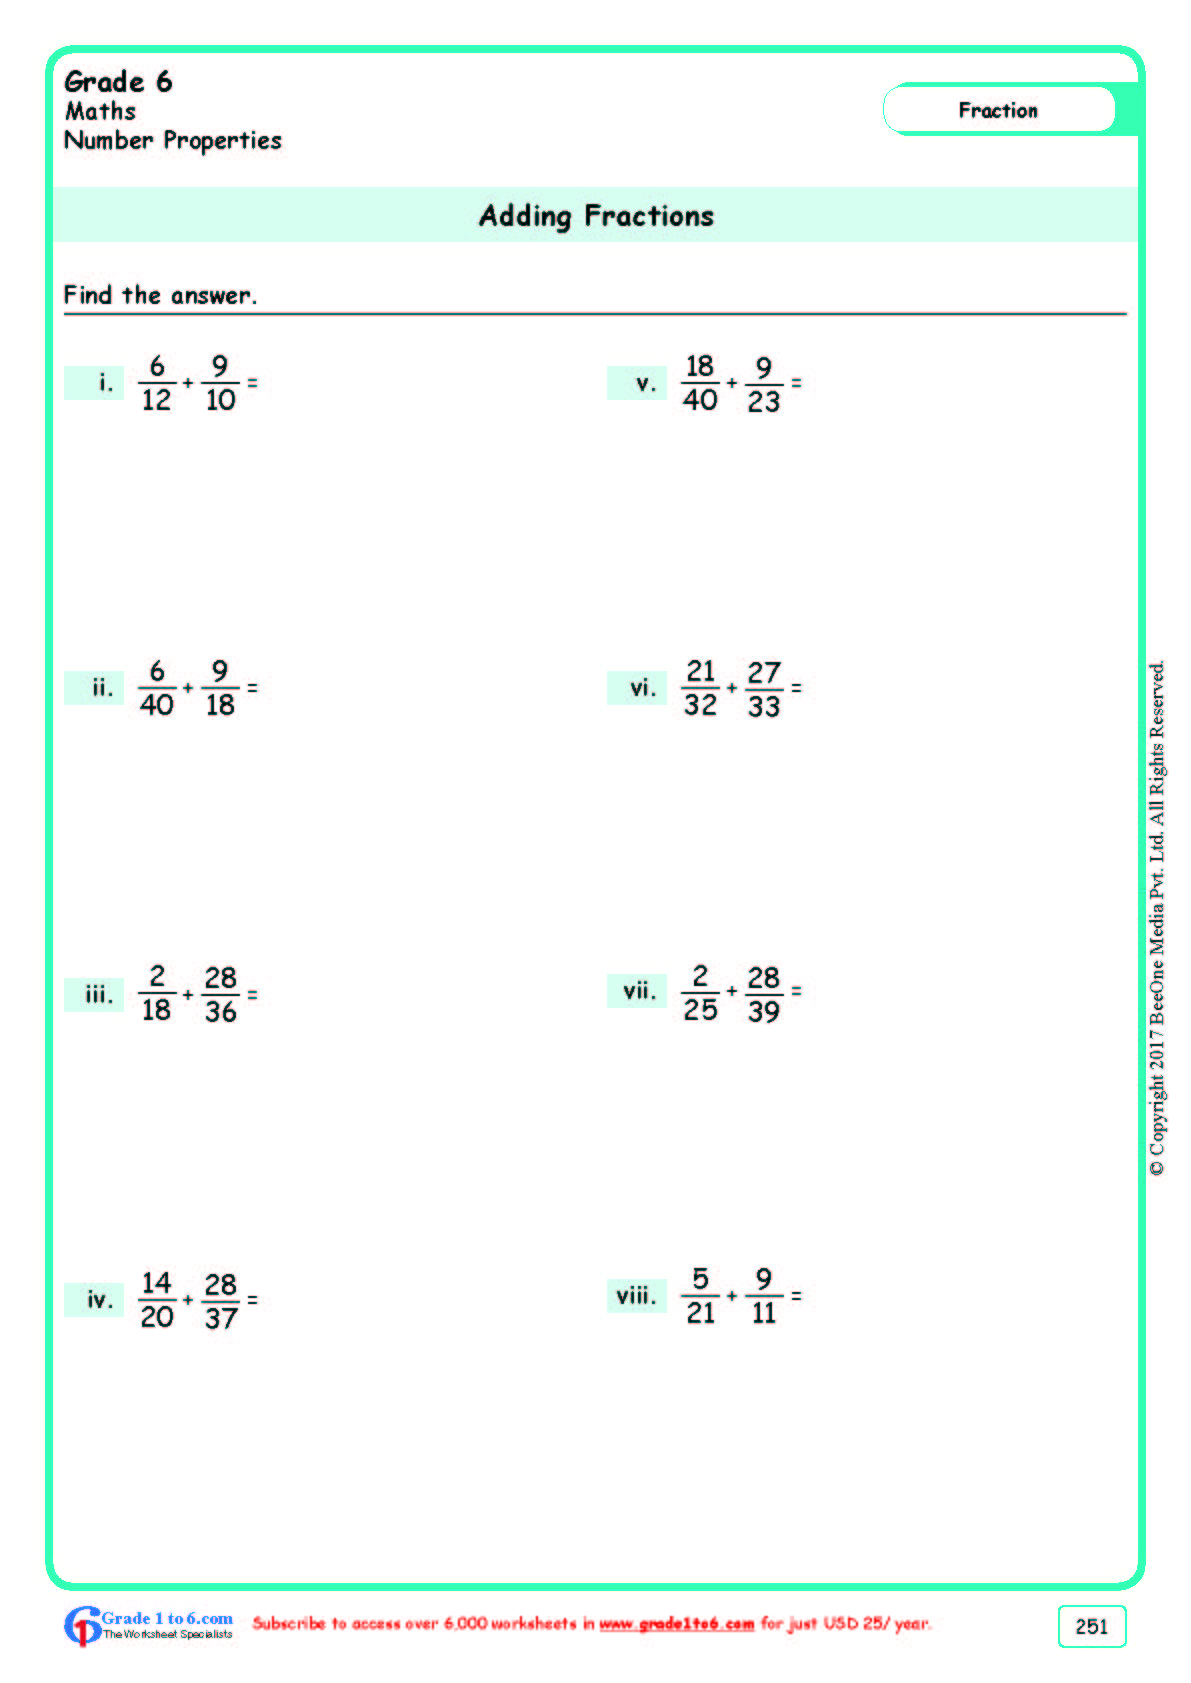 Grade 6|Adding Fractions Worksheets|www.grade1to6.com